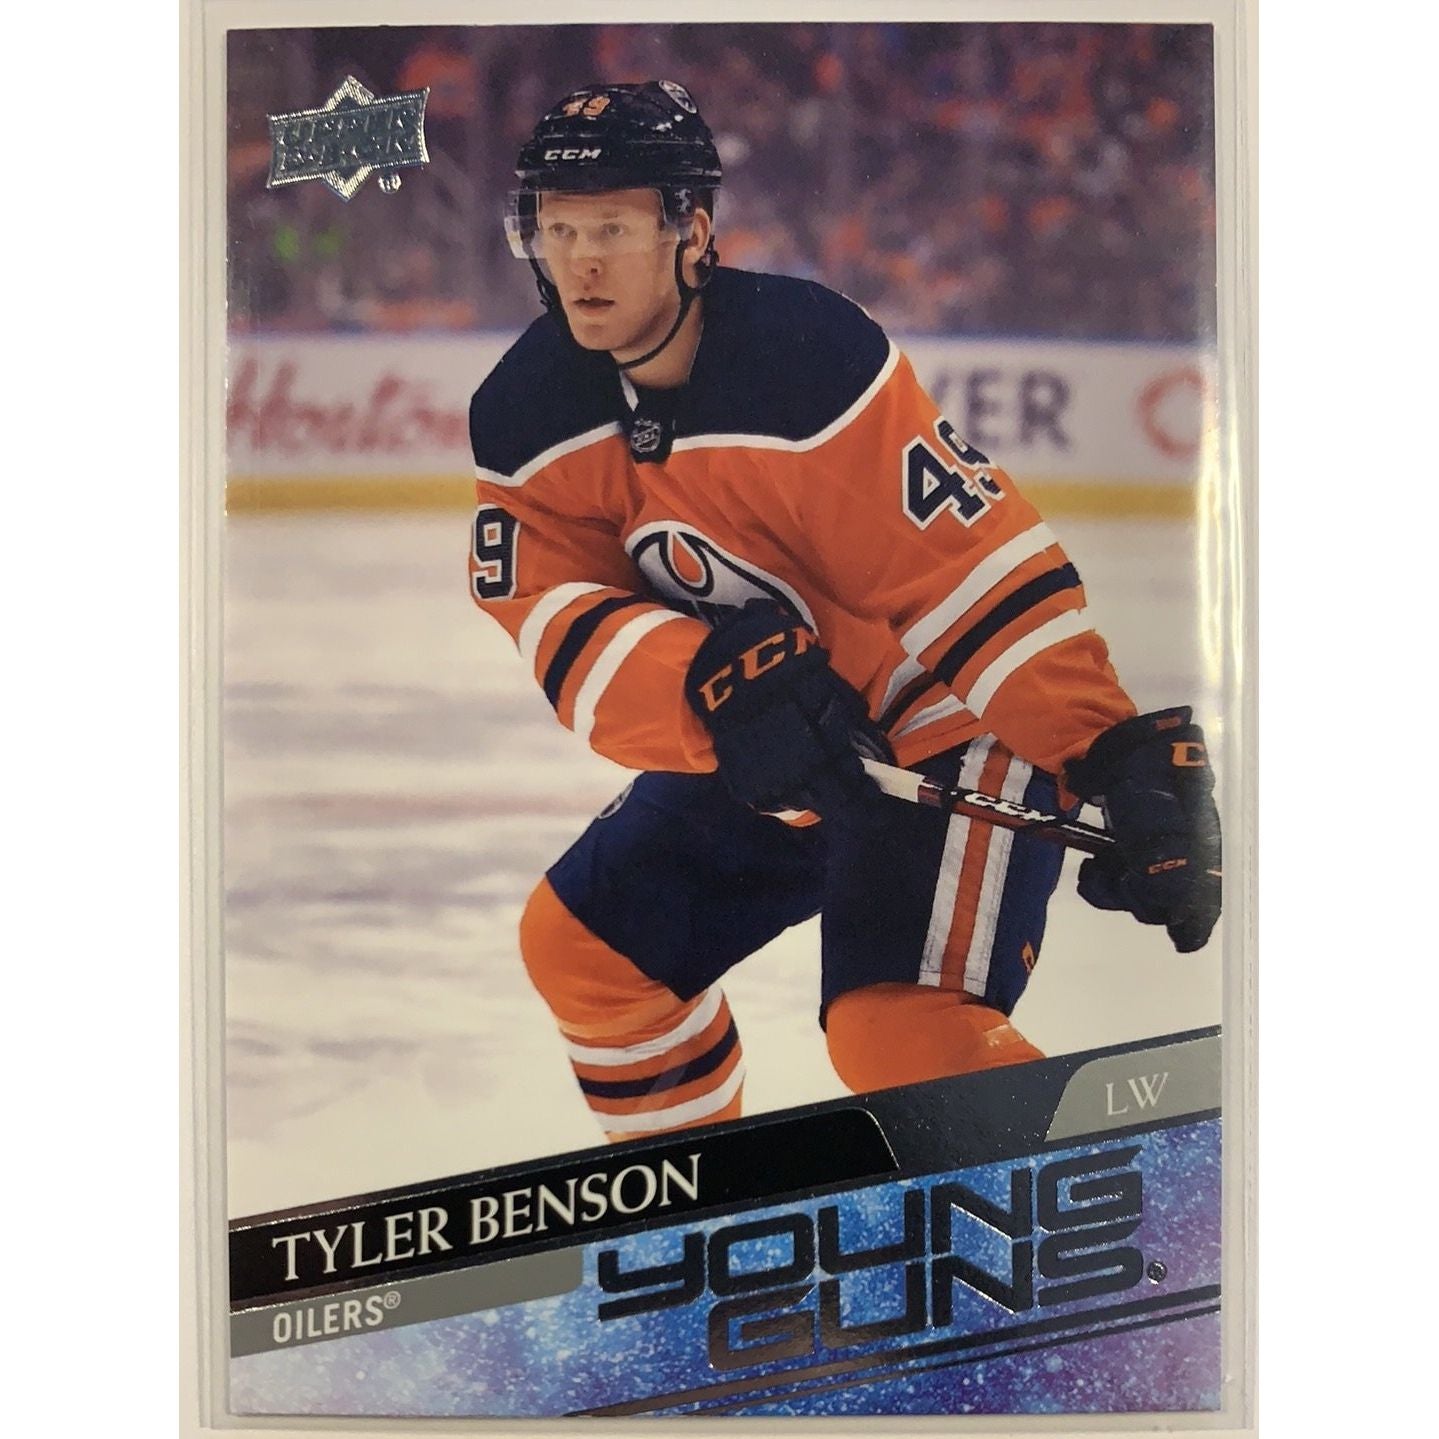  2020-21 Upper Deck Series 1 Tyler Benson Young Guns  Local Legends Cards & Collectibles